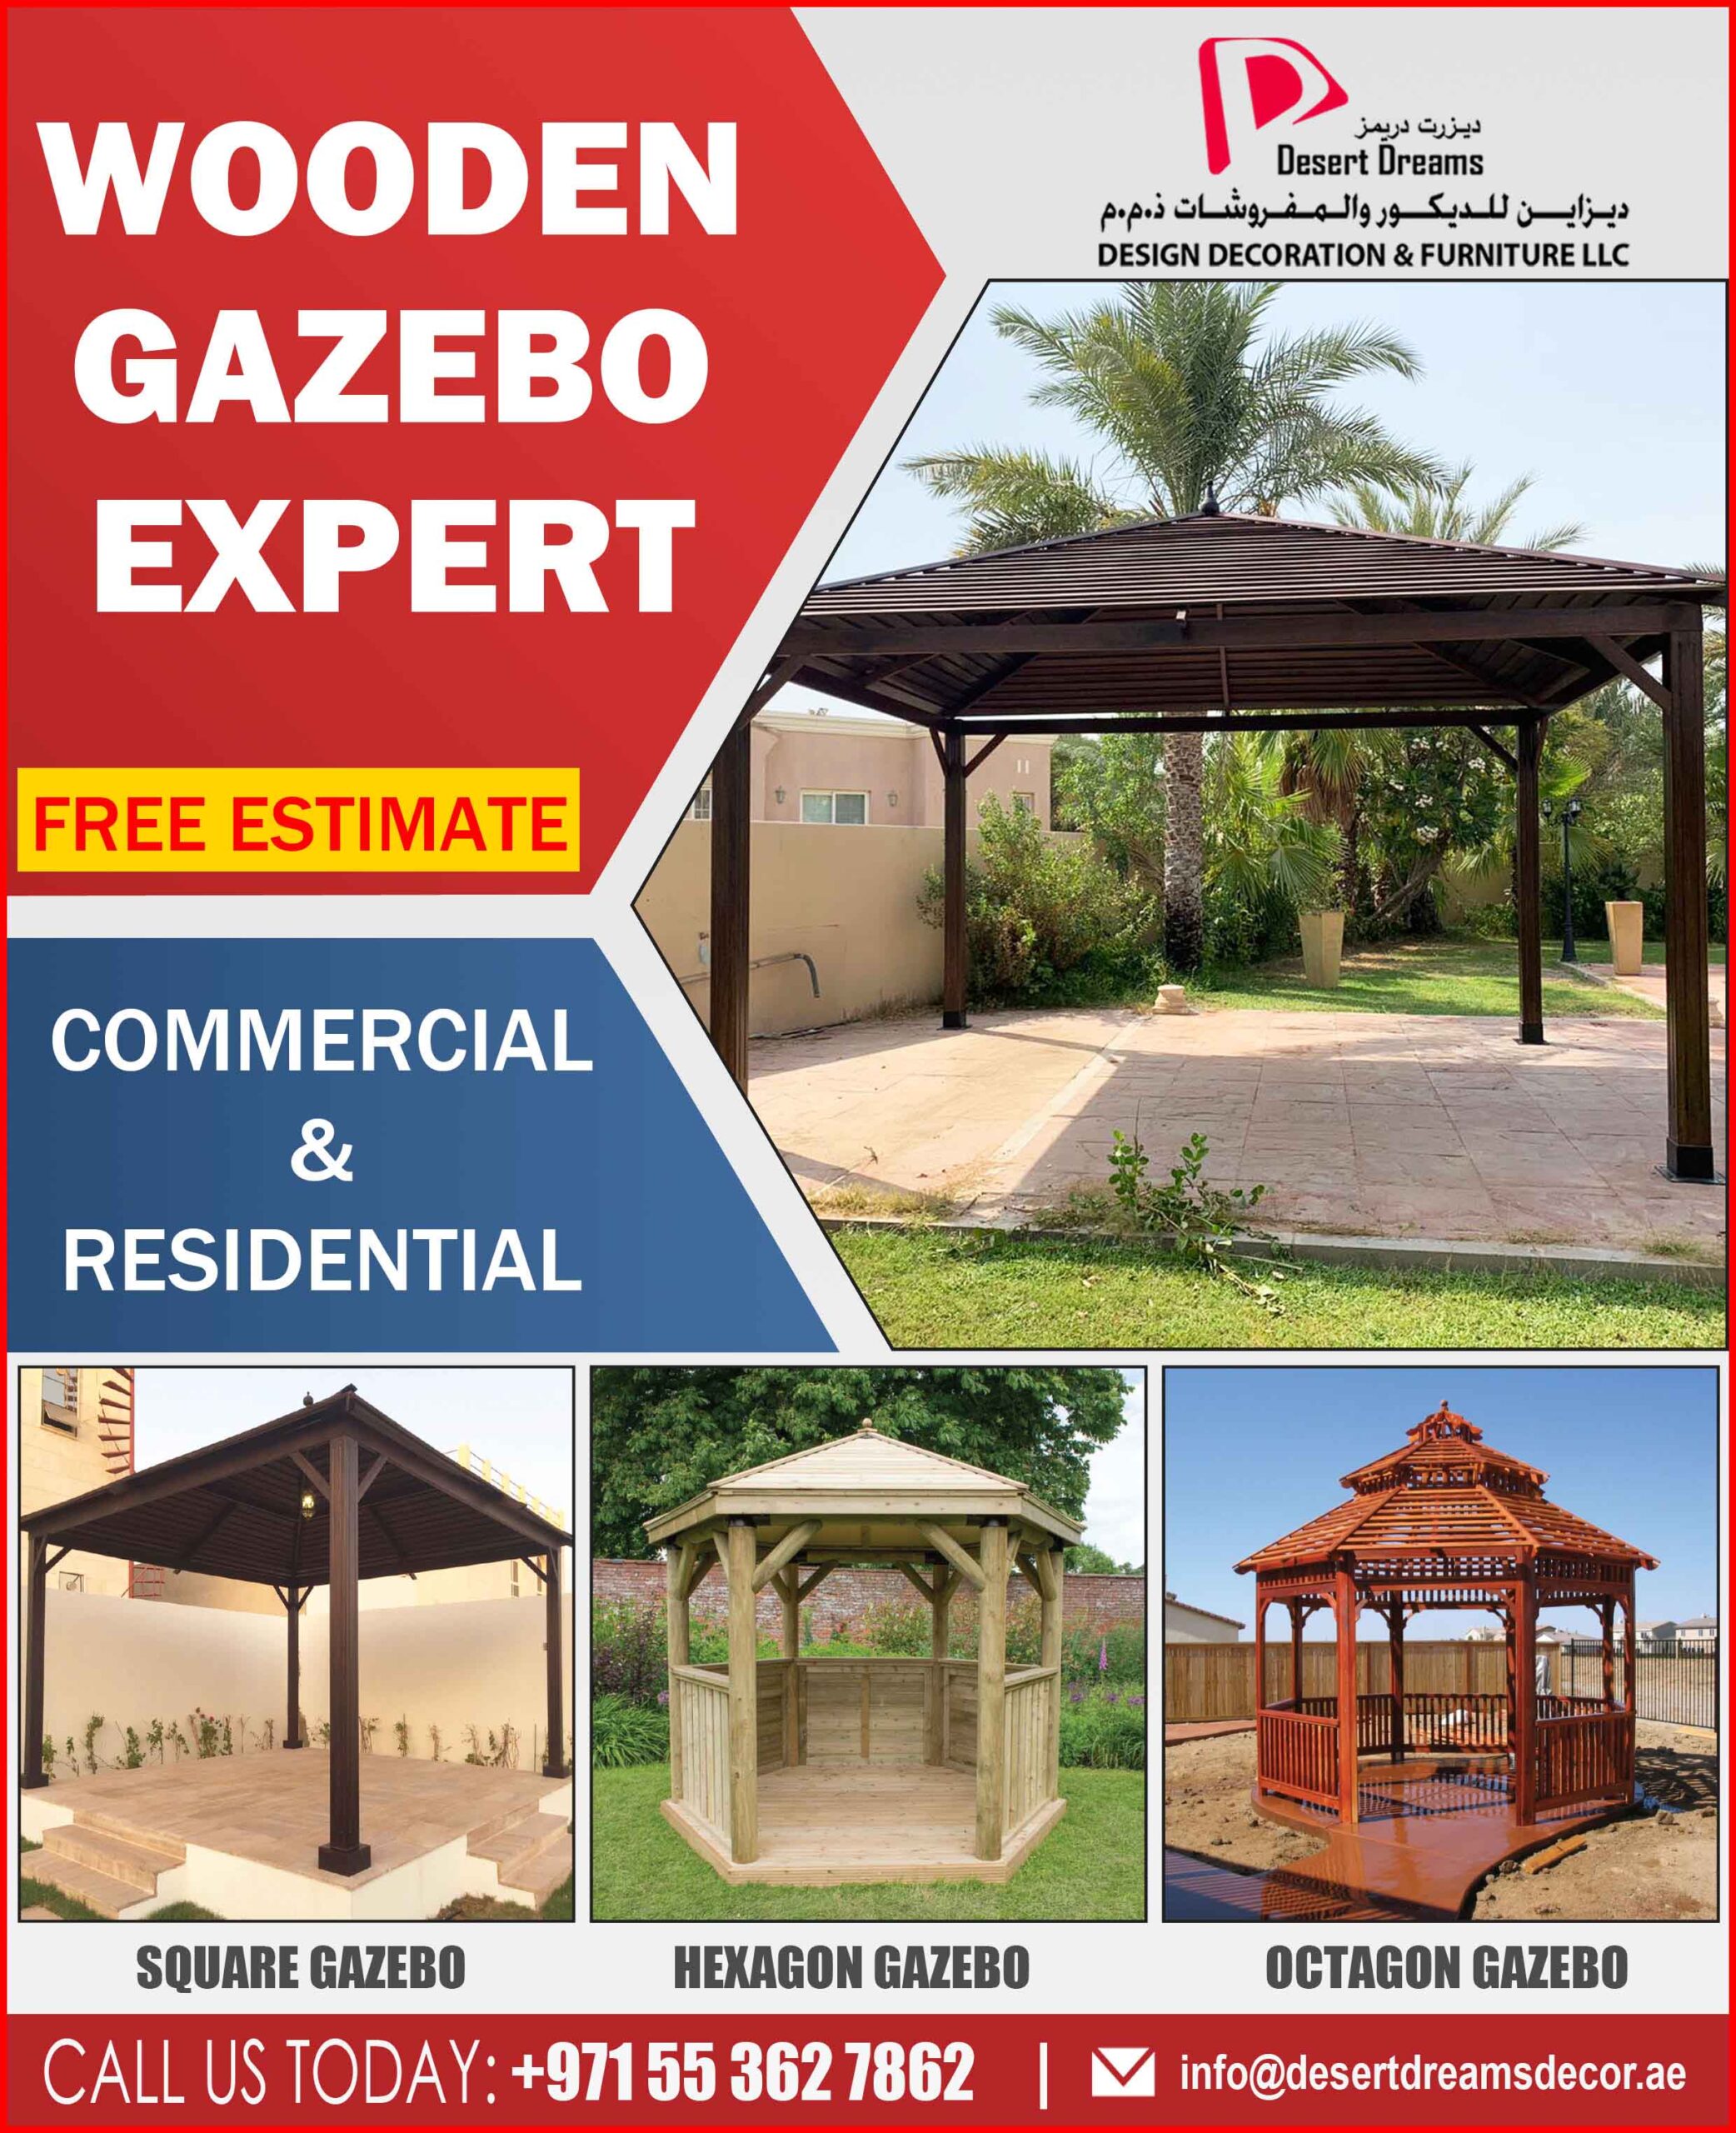 Supply and Install Wooden Gazebo in Uae_Wooden Gazebo Dubai_Outdoor Gazebo Uae.jpg